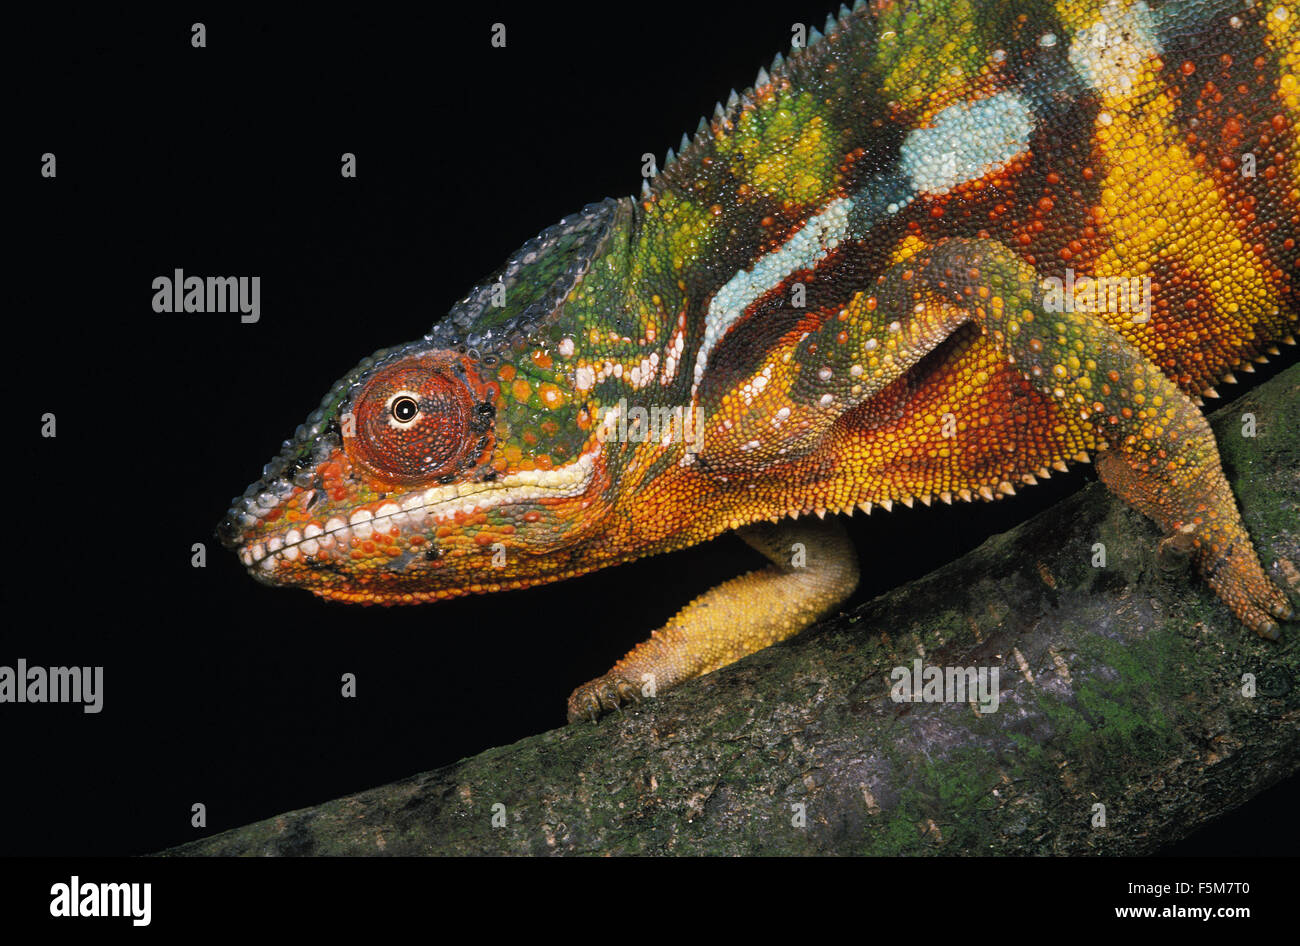 Jewelled Chameleon or Carpet Chameleon, furcifer lateralis, Adult standing on Branch Stock Photo